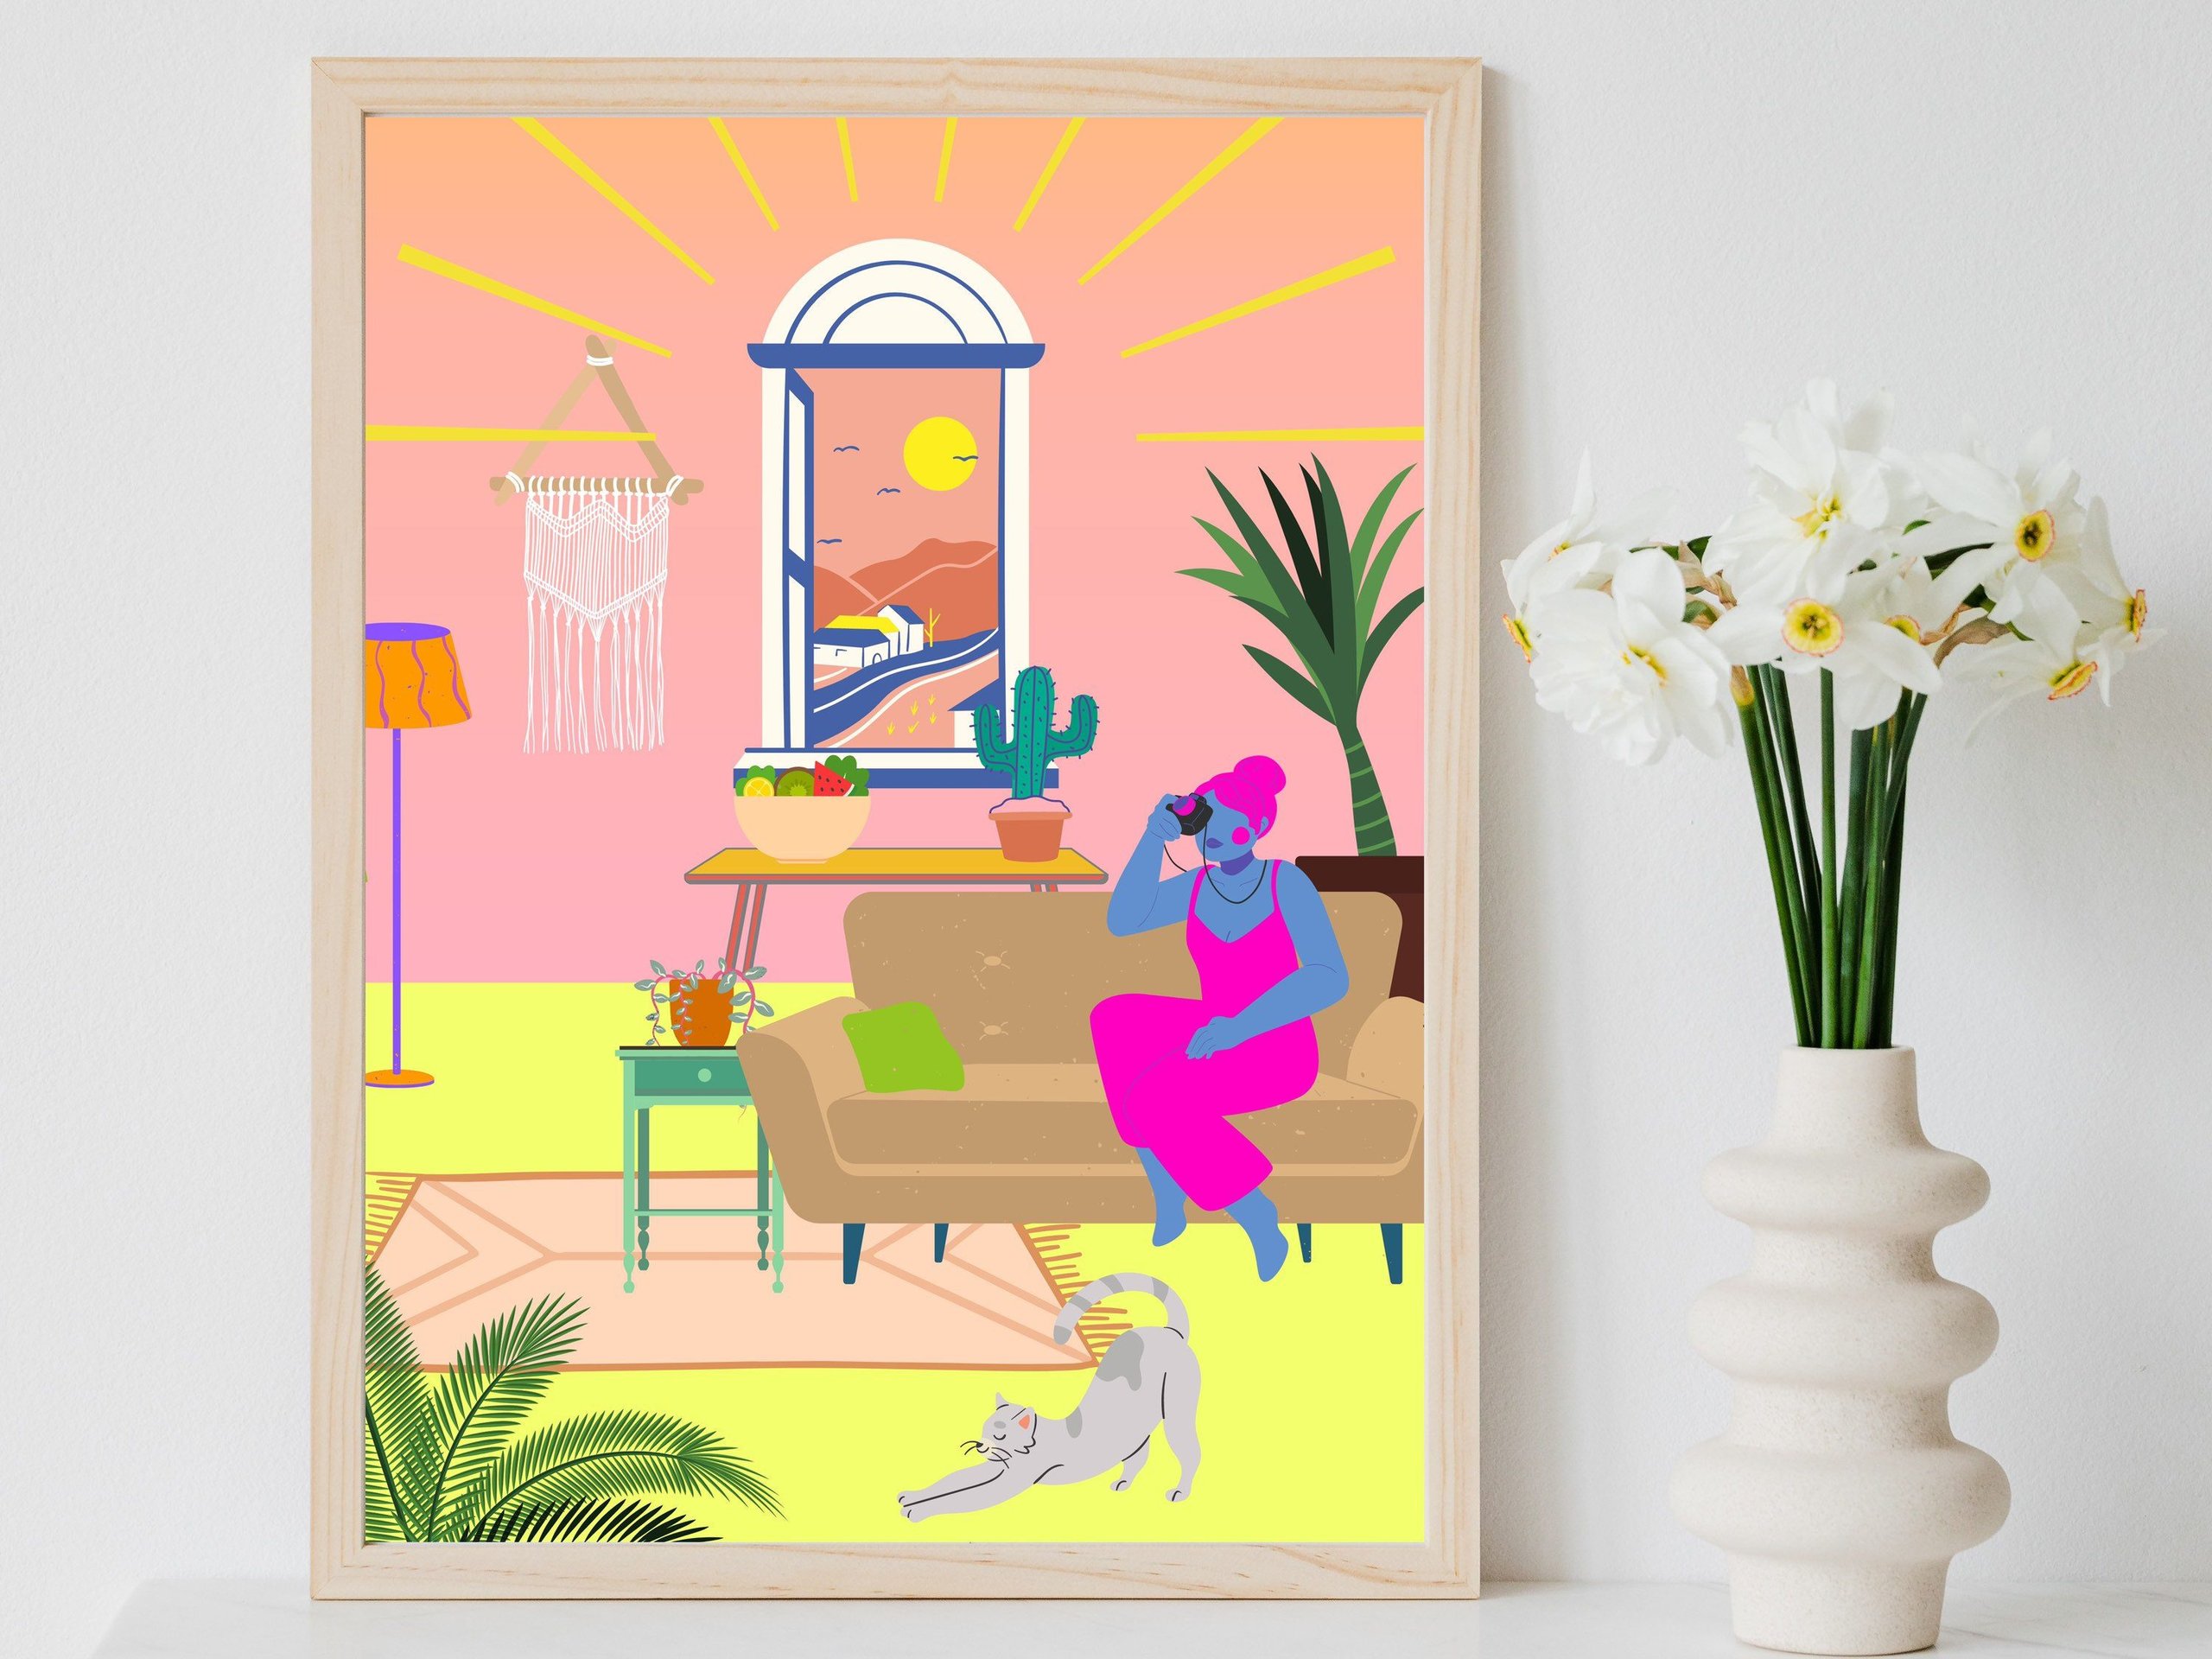 Paradise House: Living Room A4/A3 Print Wall Art